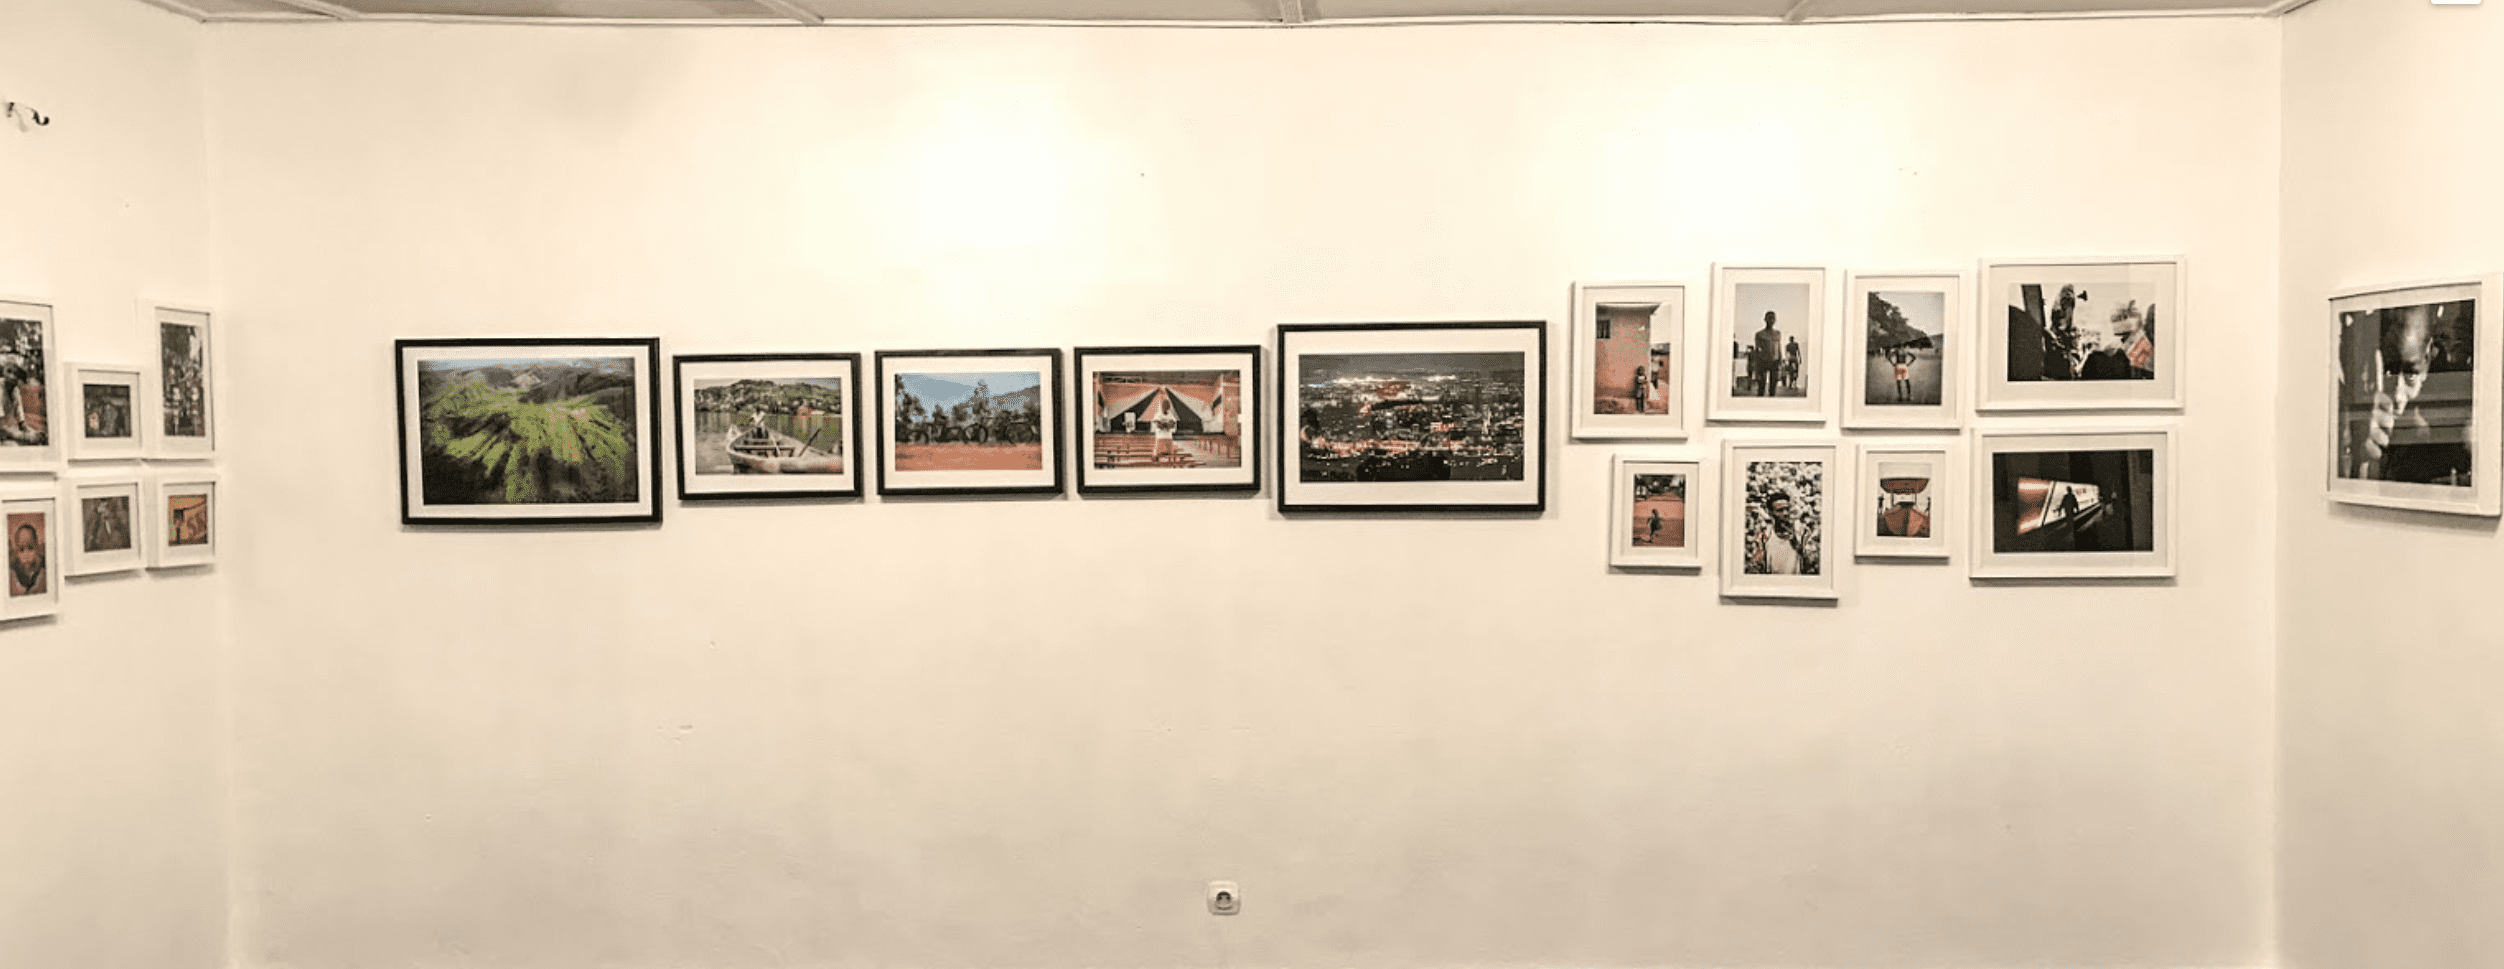 Top Museums Art Galleries in Kigali